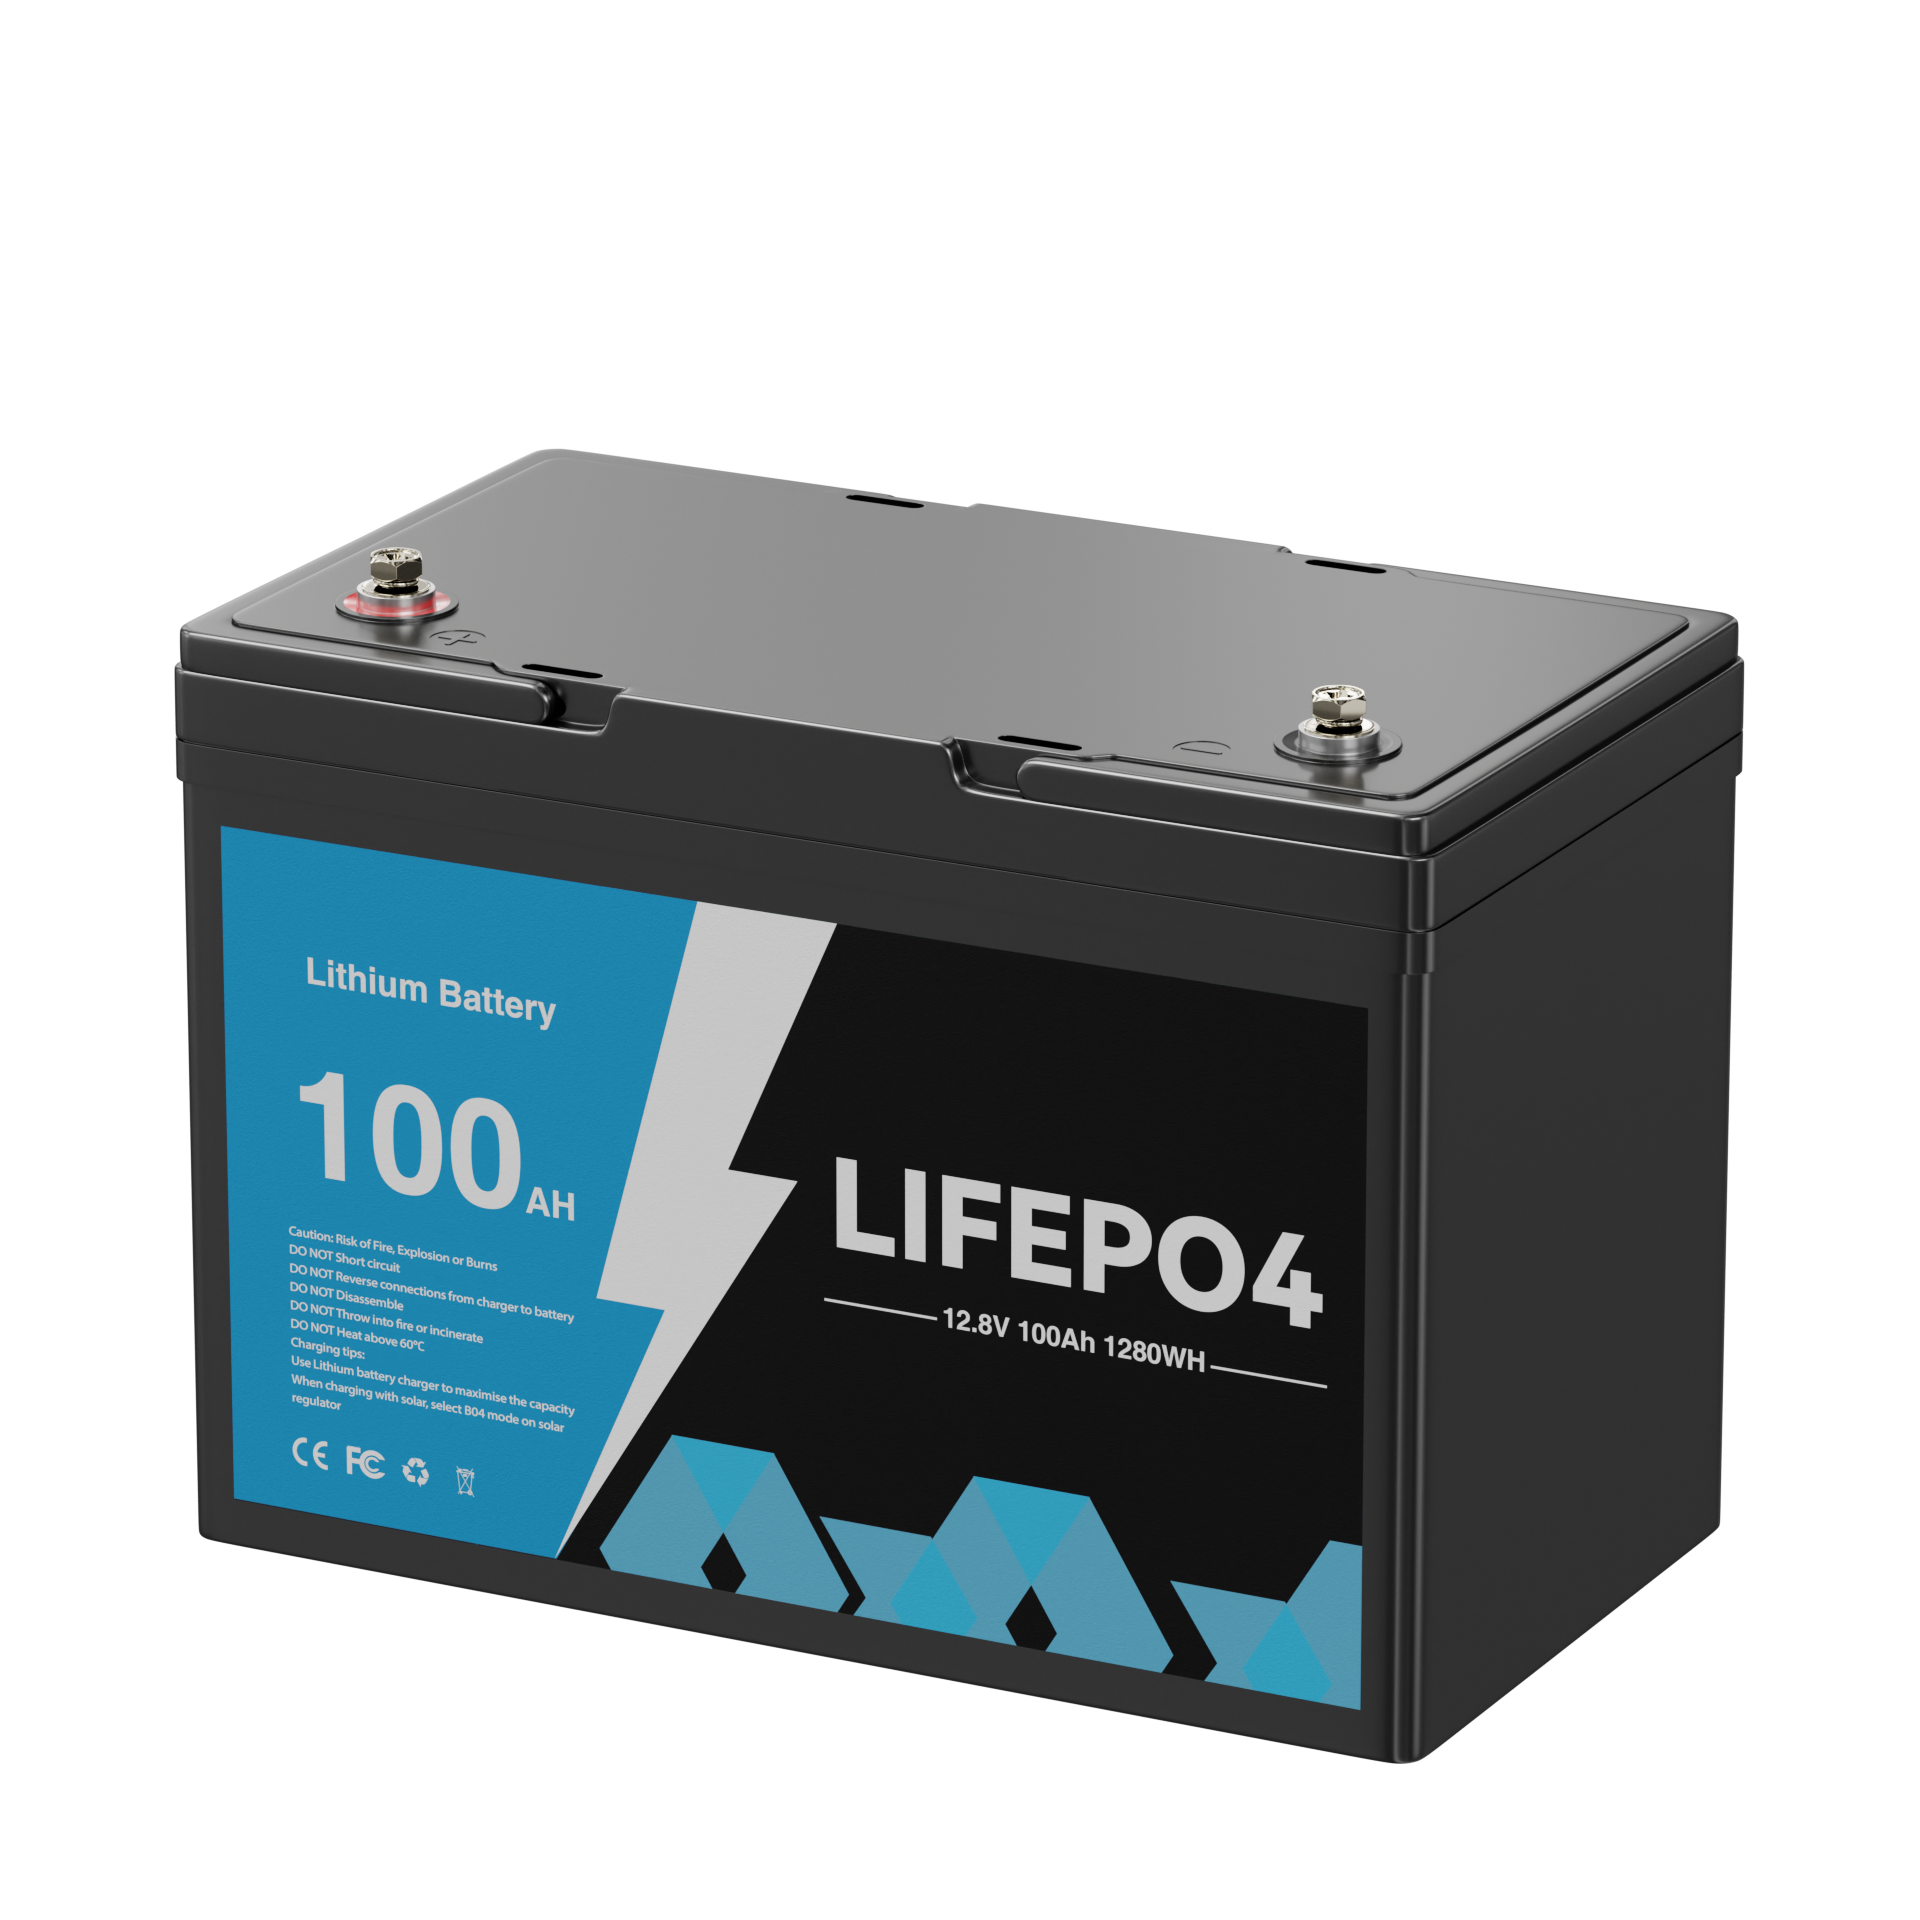 12.8V50AH铅改锂电池 适用于房车 电动车锂电池 大容量锂电池